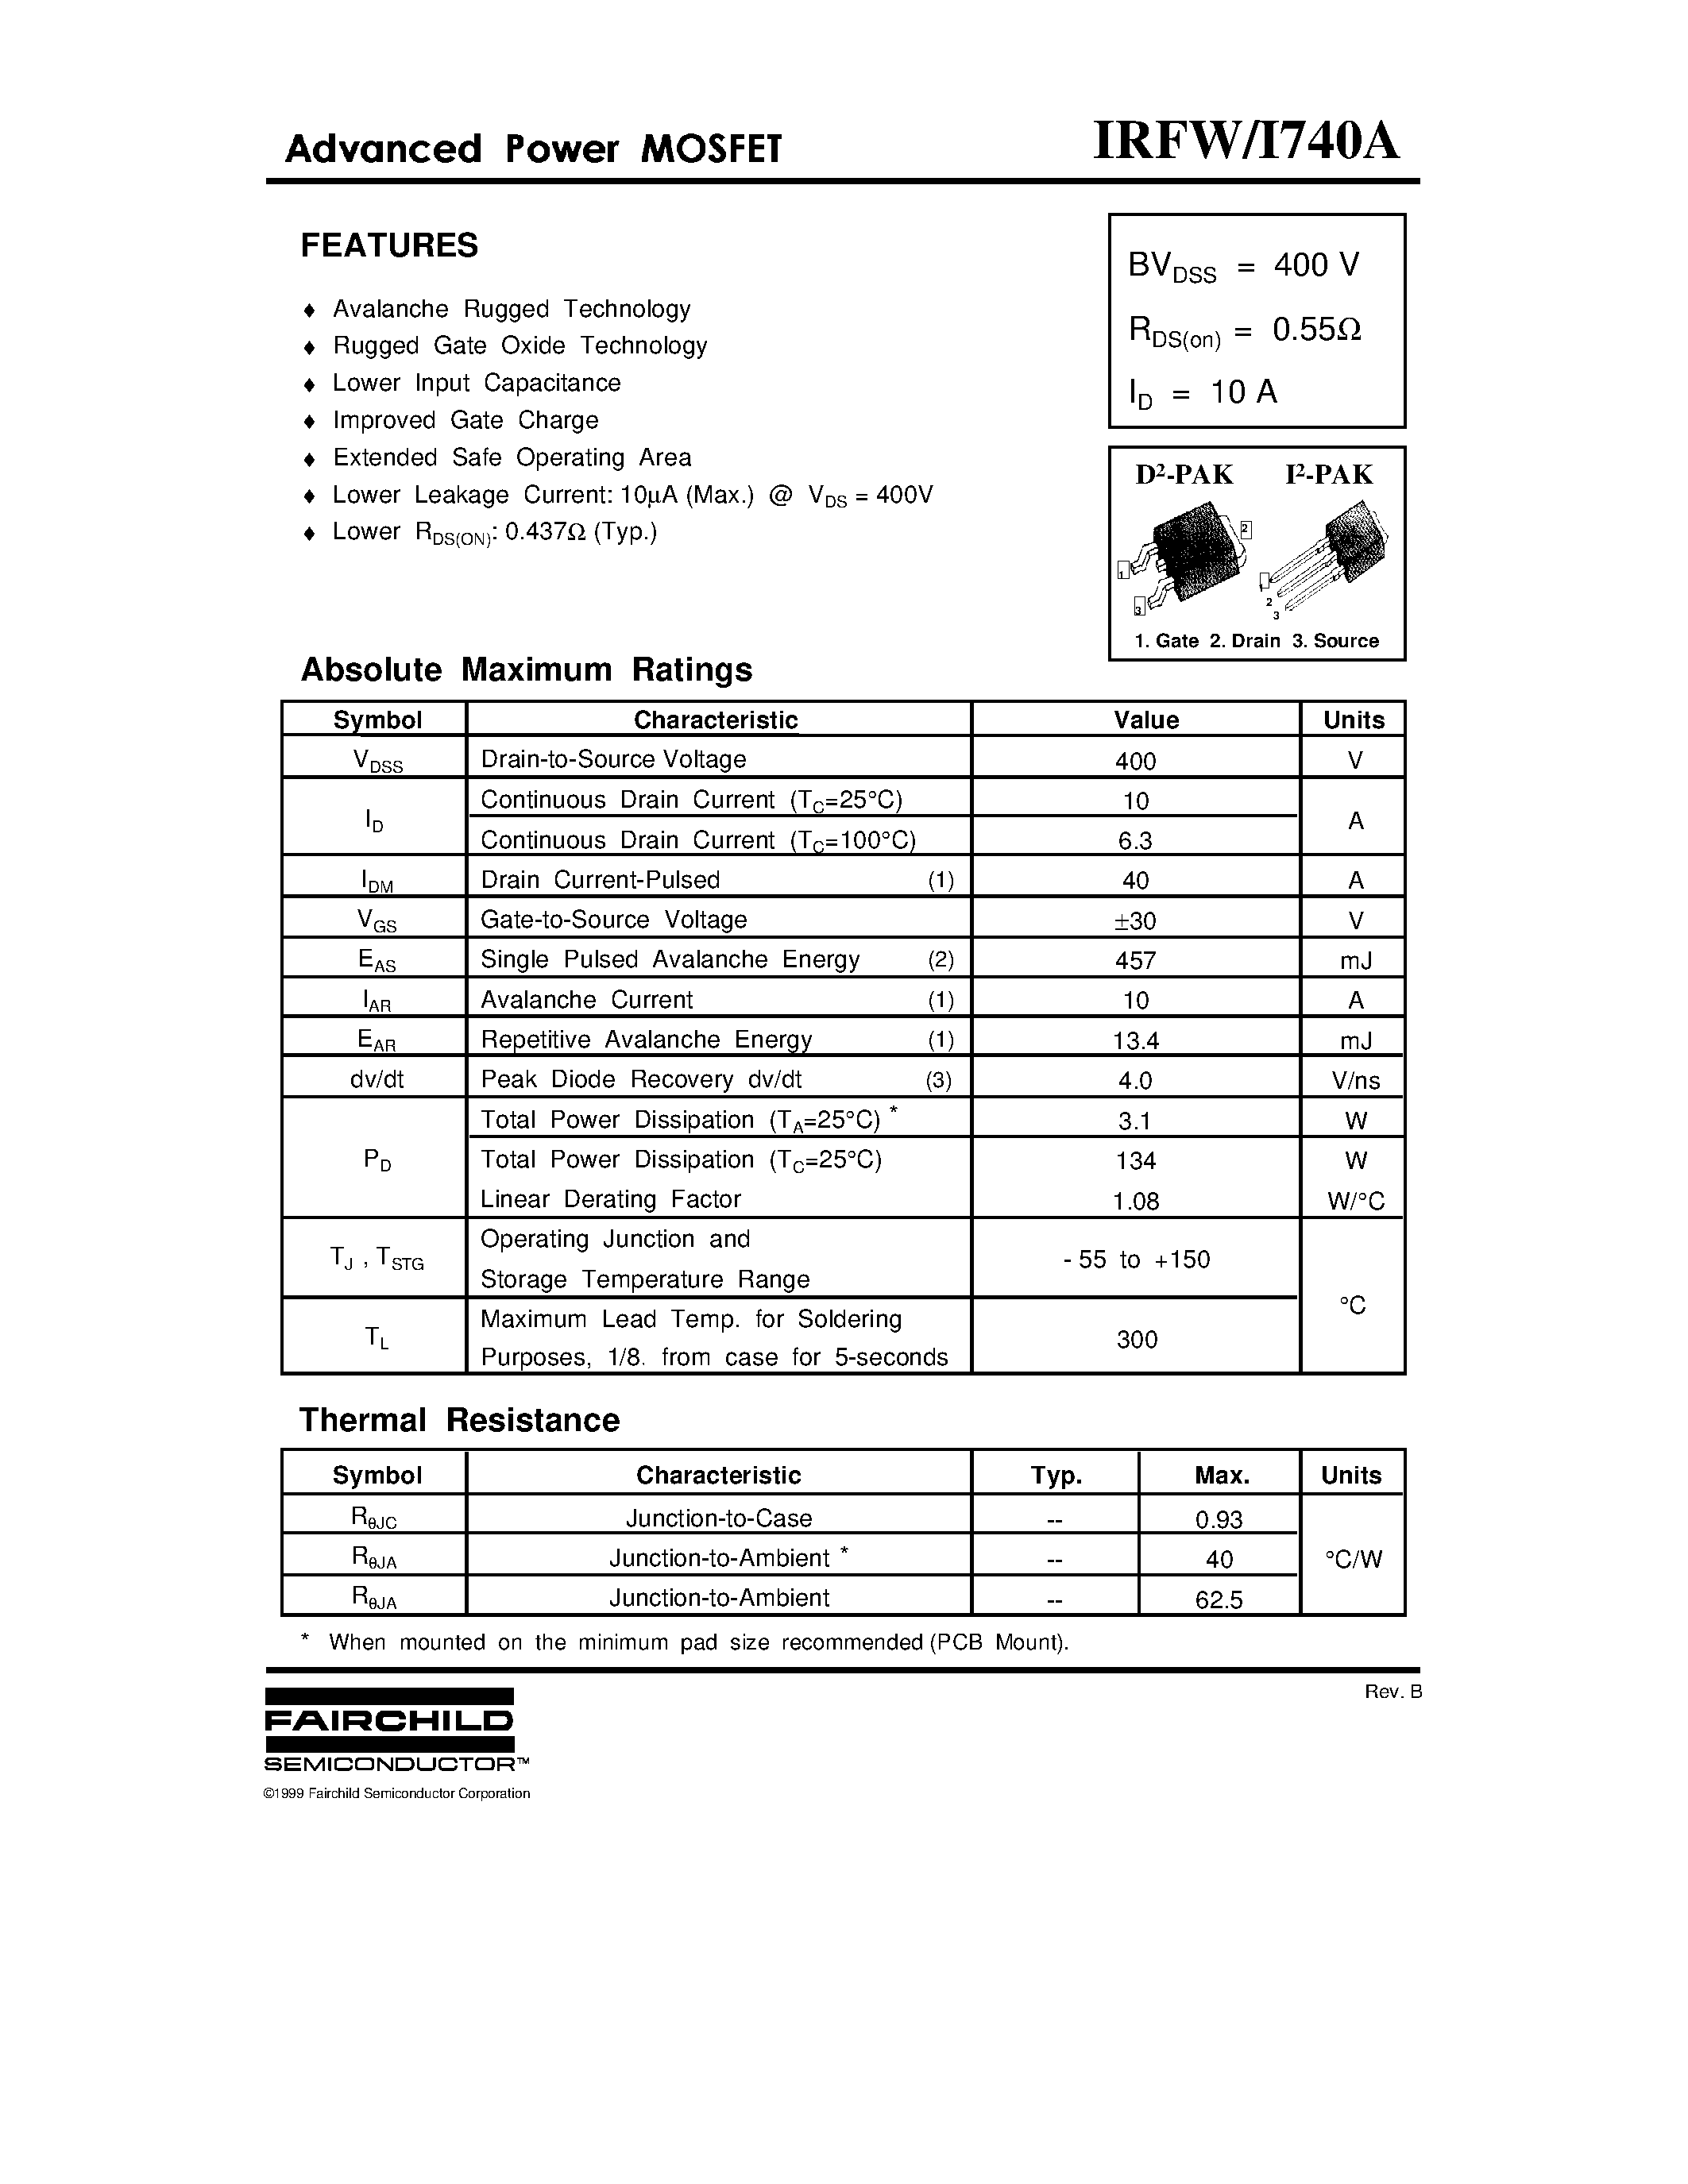 Даташит IRFI740A - Advanced Power MOSFET страница 1